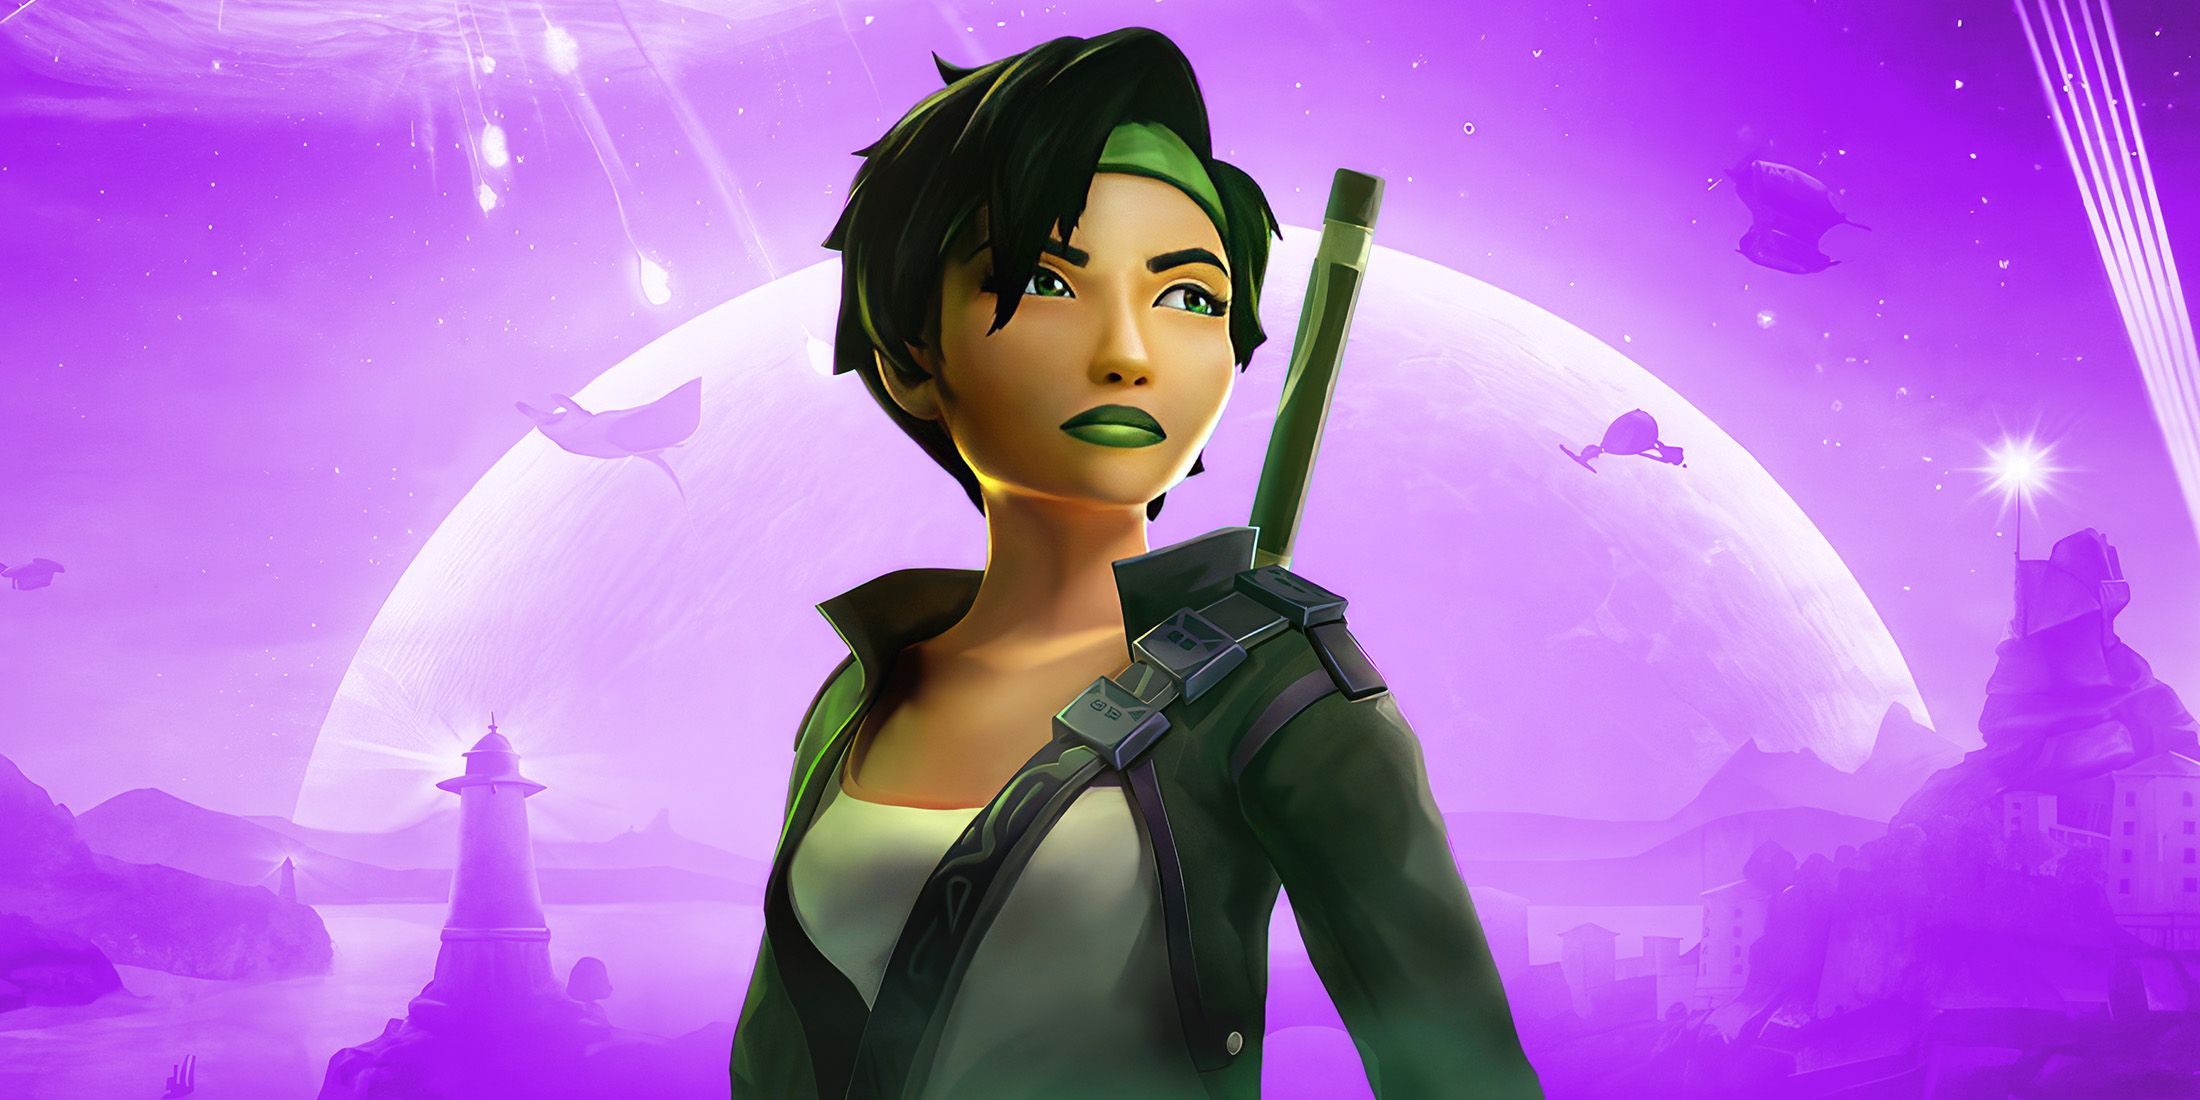 Beyond Good and Evil upscaled Jade on purple background edit